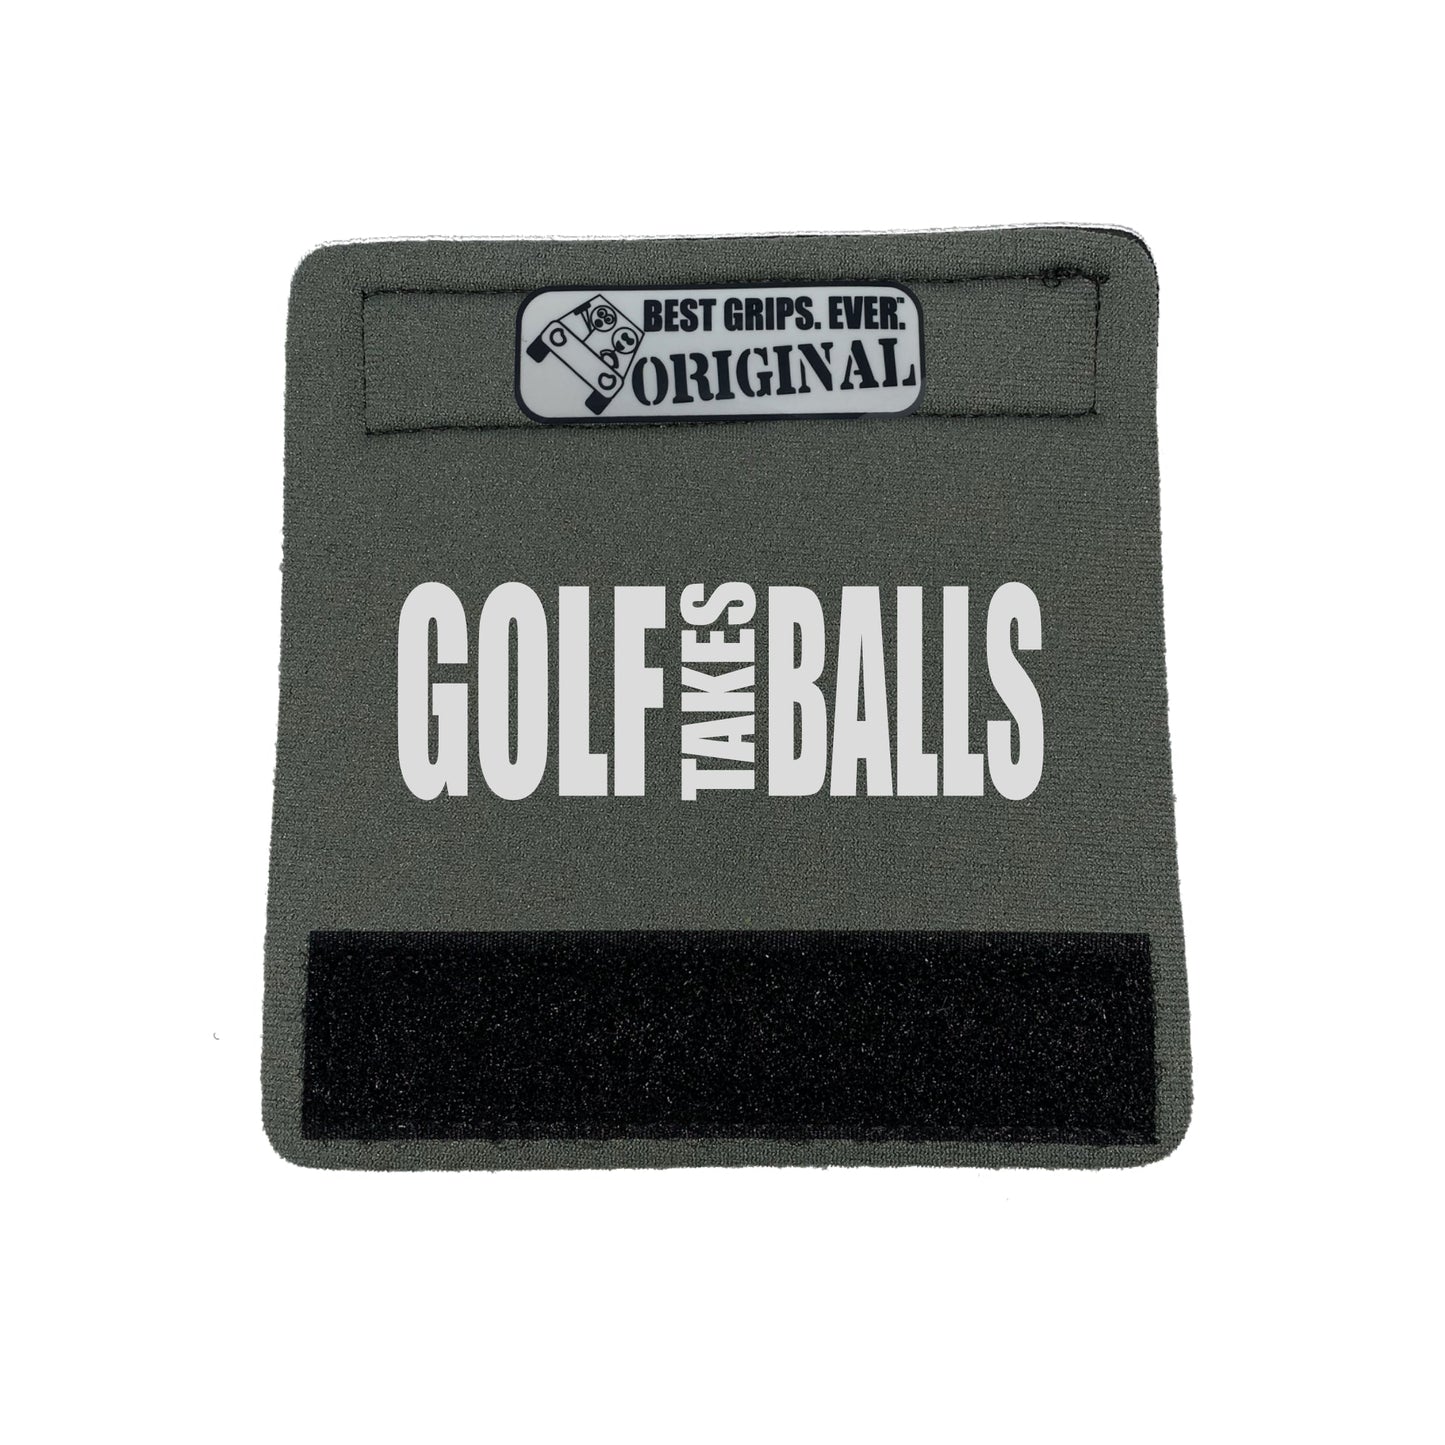 Golf Takes Balls Grip